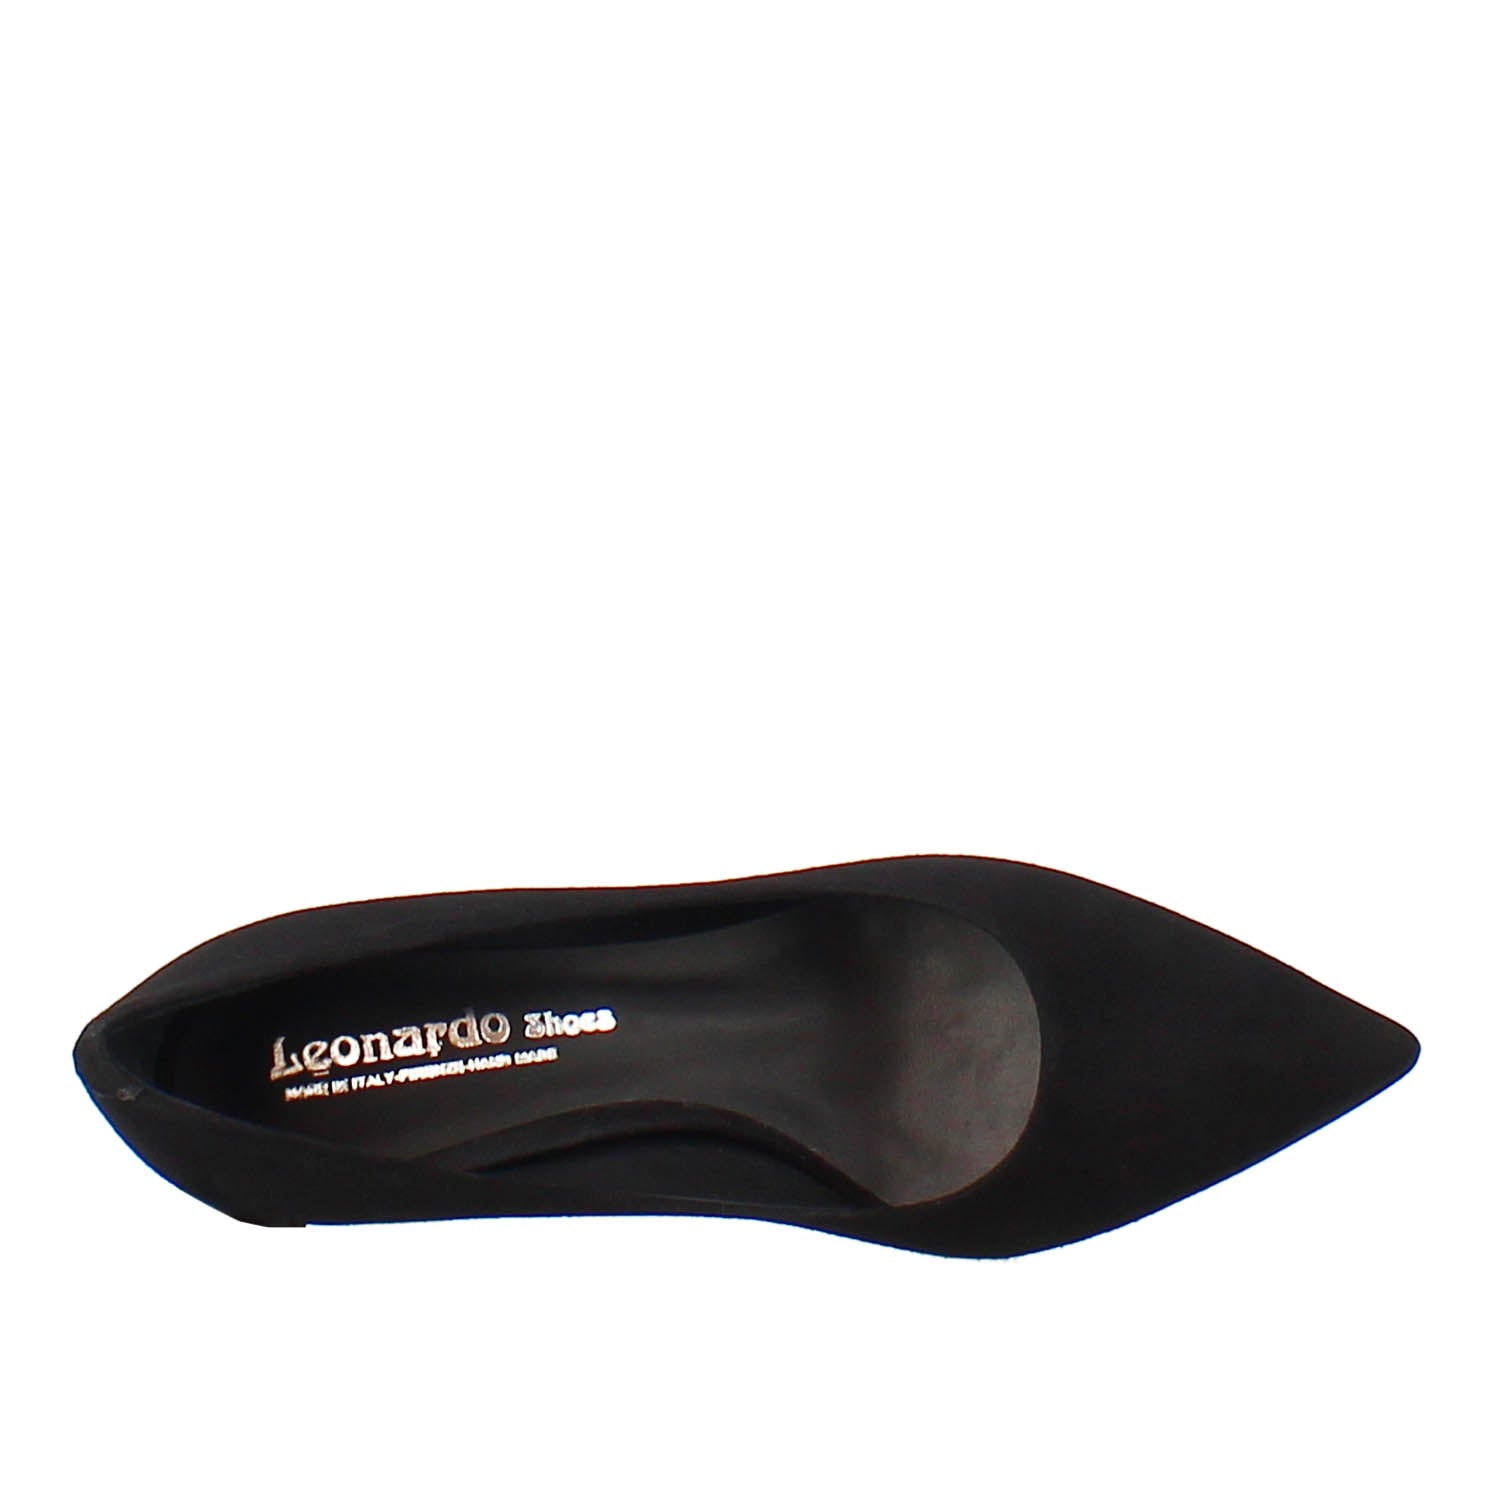 Decollette in black suede with high heel 